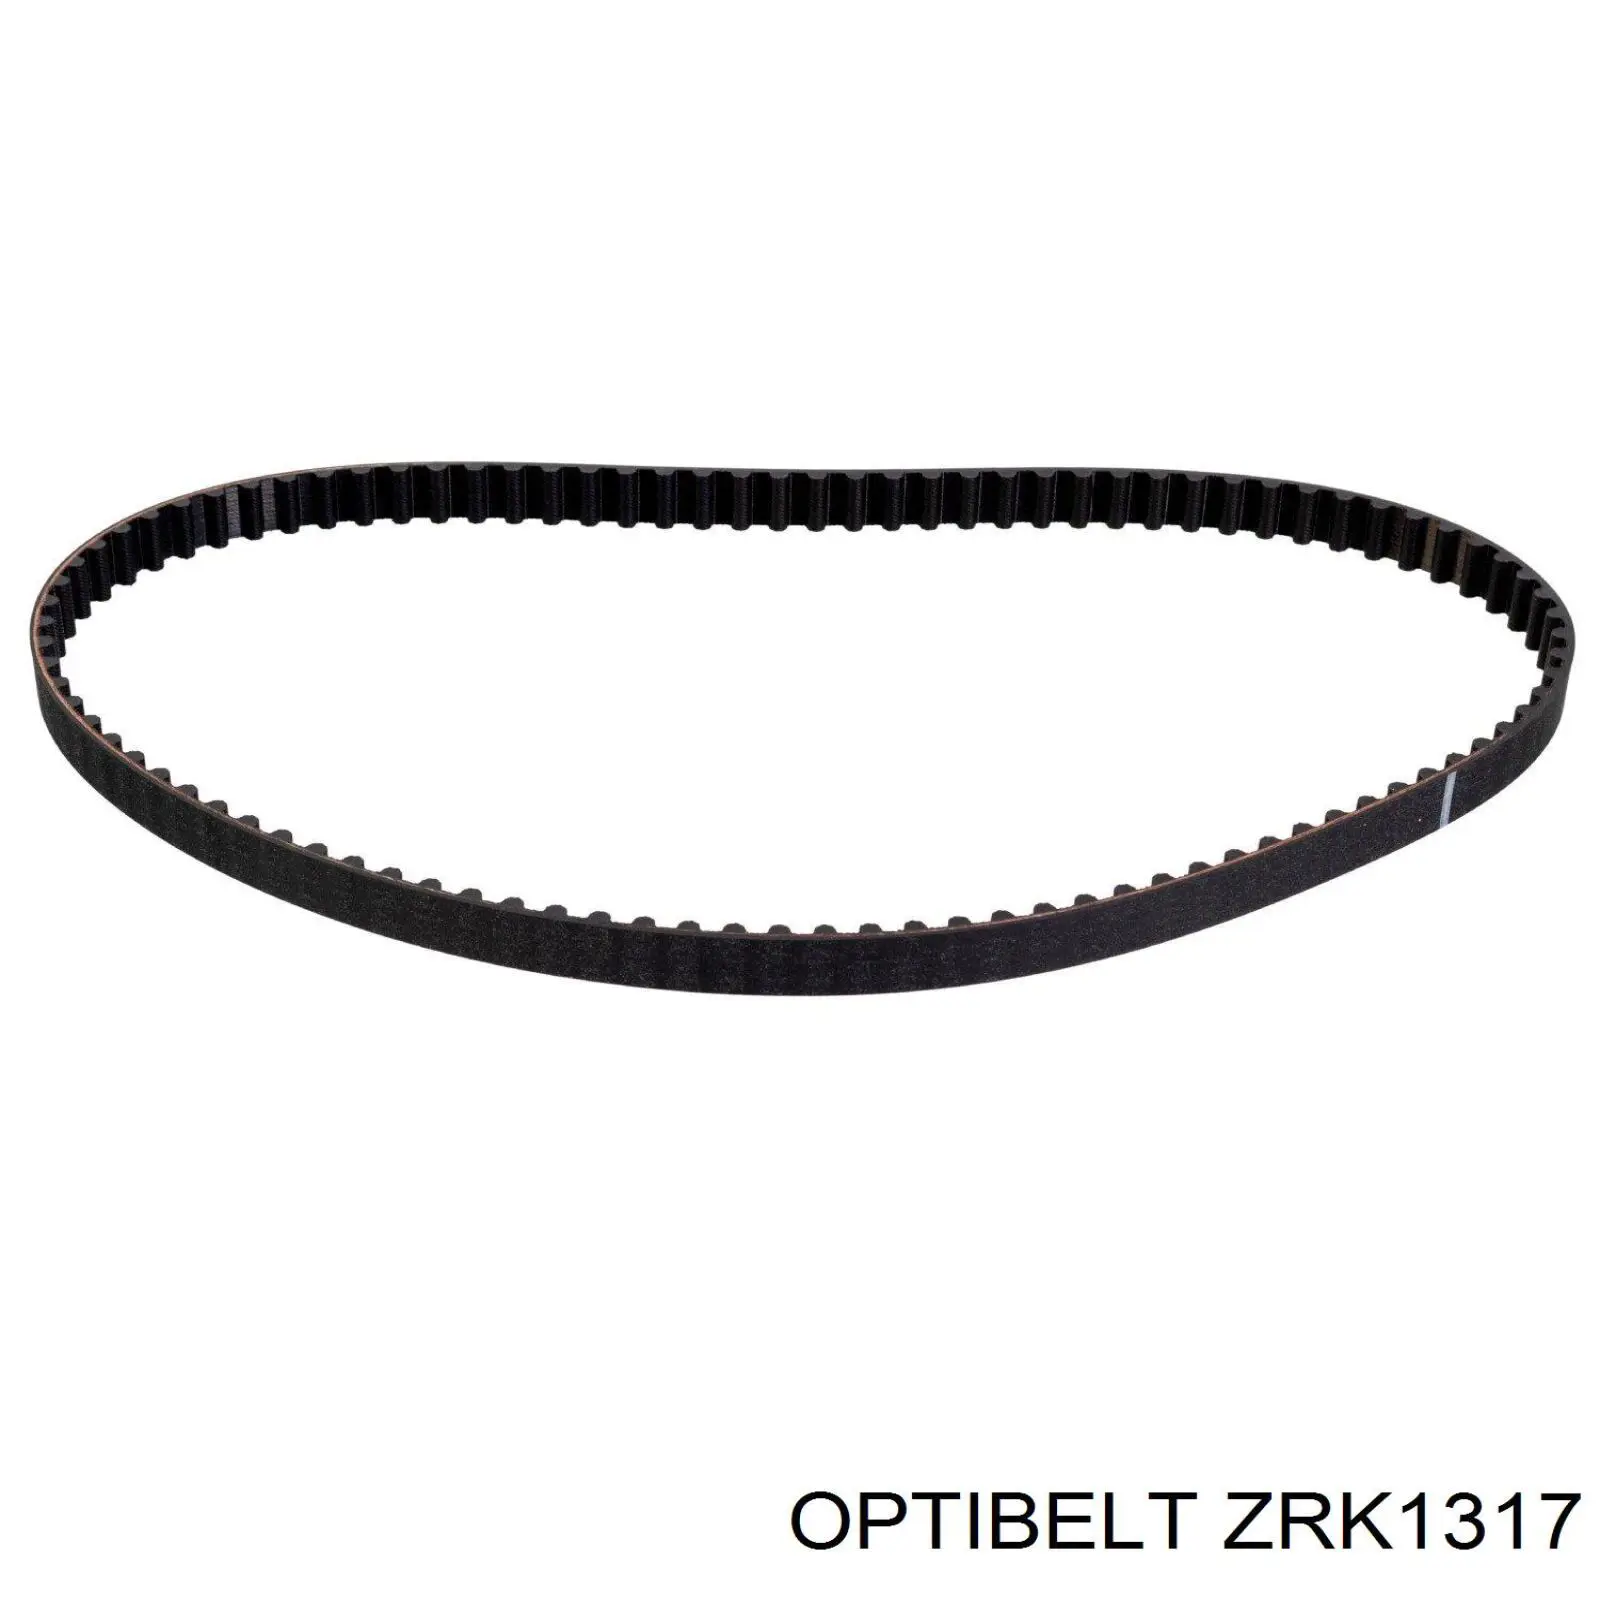 ZRK1317 Optibelt correa distribución